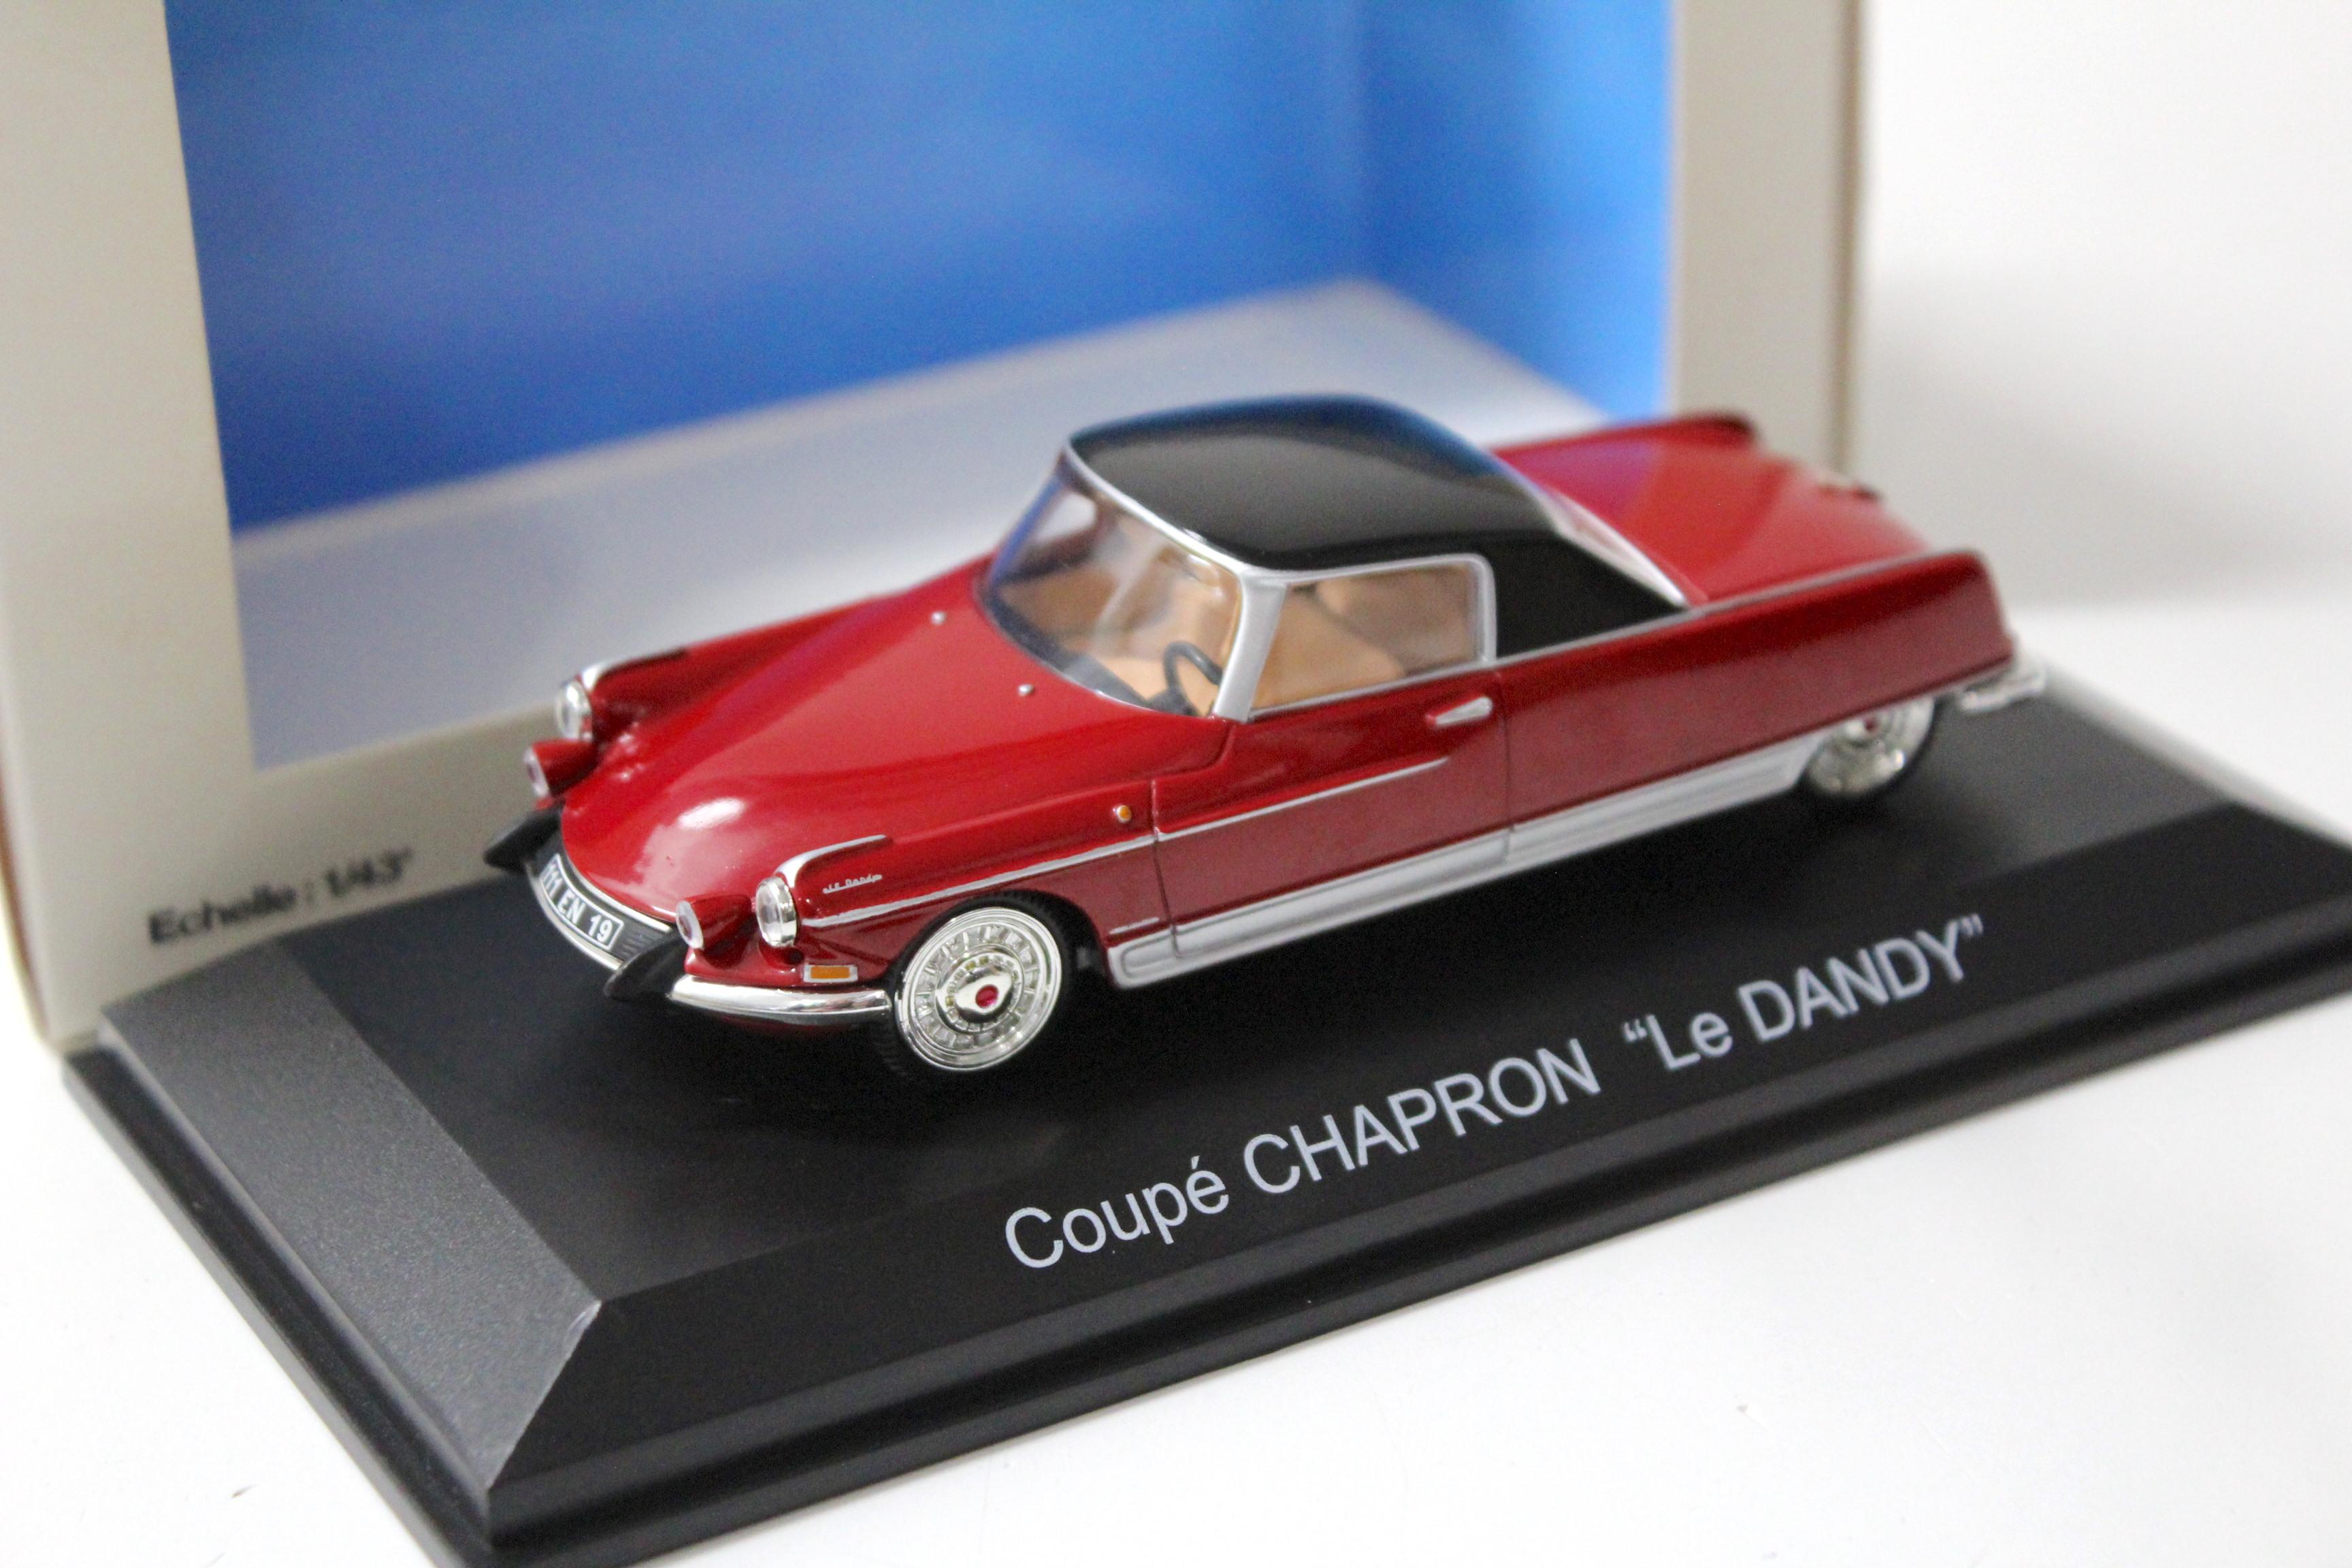 1:43 Norev Citroen Coupe CHAPRON "Le Dandy" red/ black roof